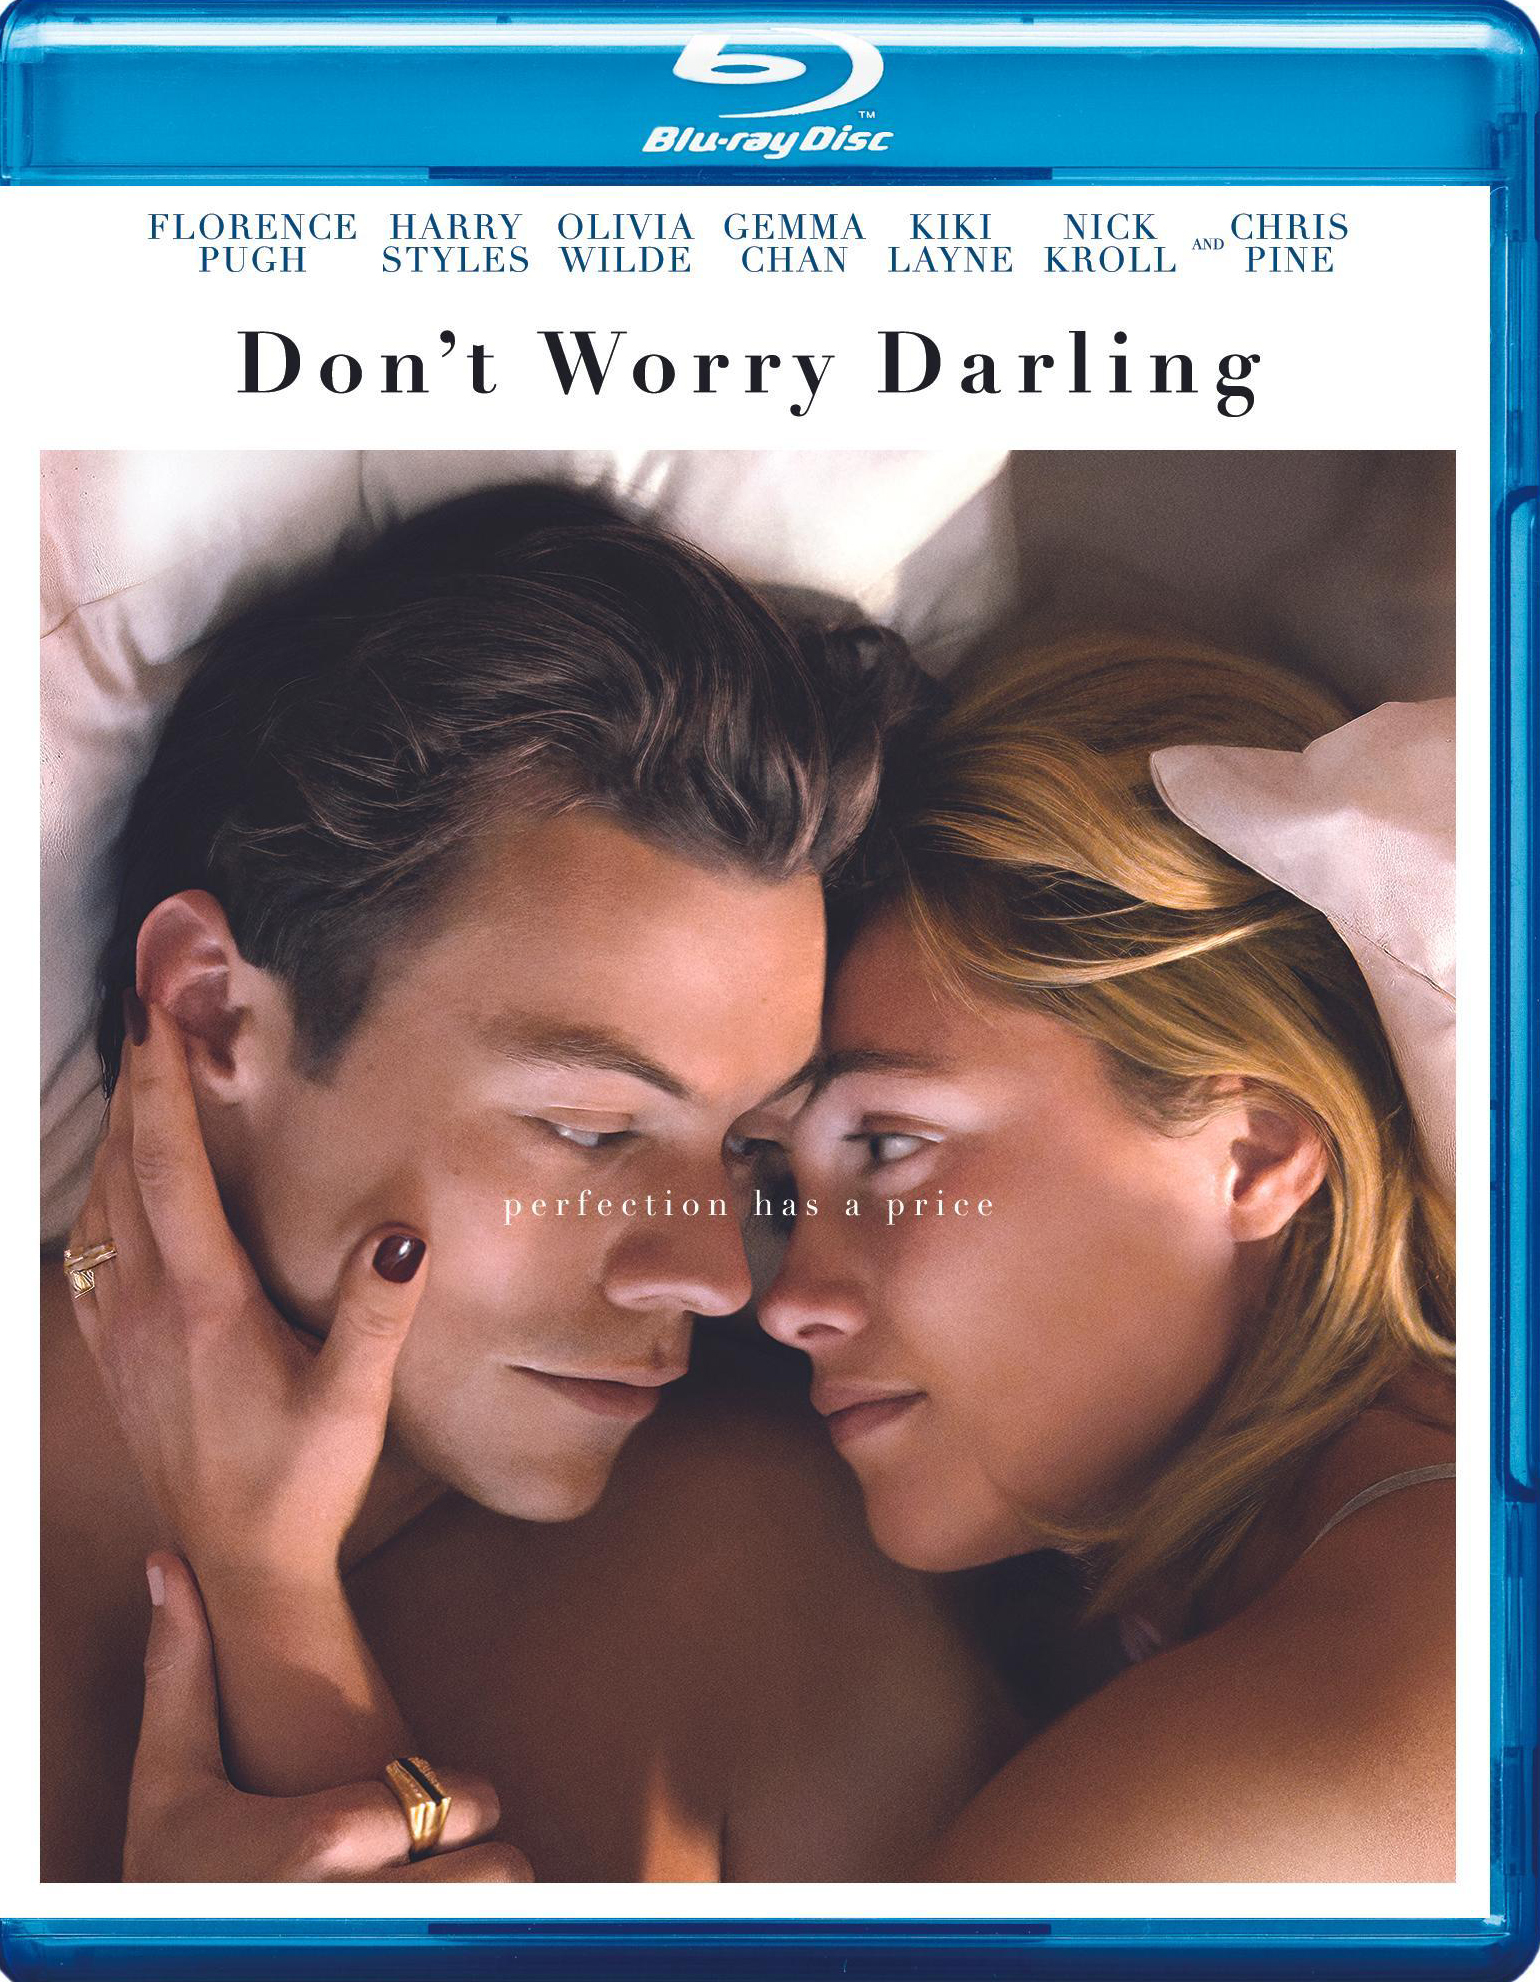 

Don't Worry Darling [Includes Digital Copy] [Blu-ray/DVD] [2022]